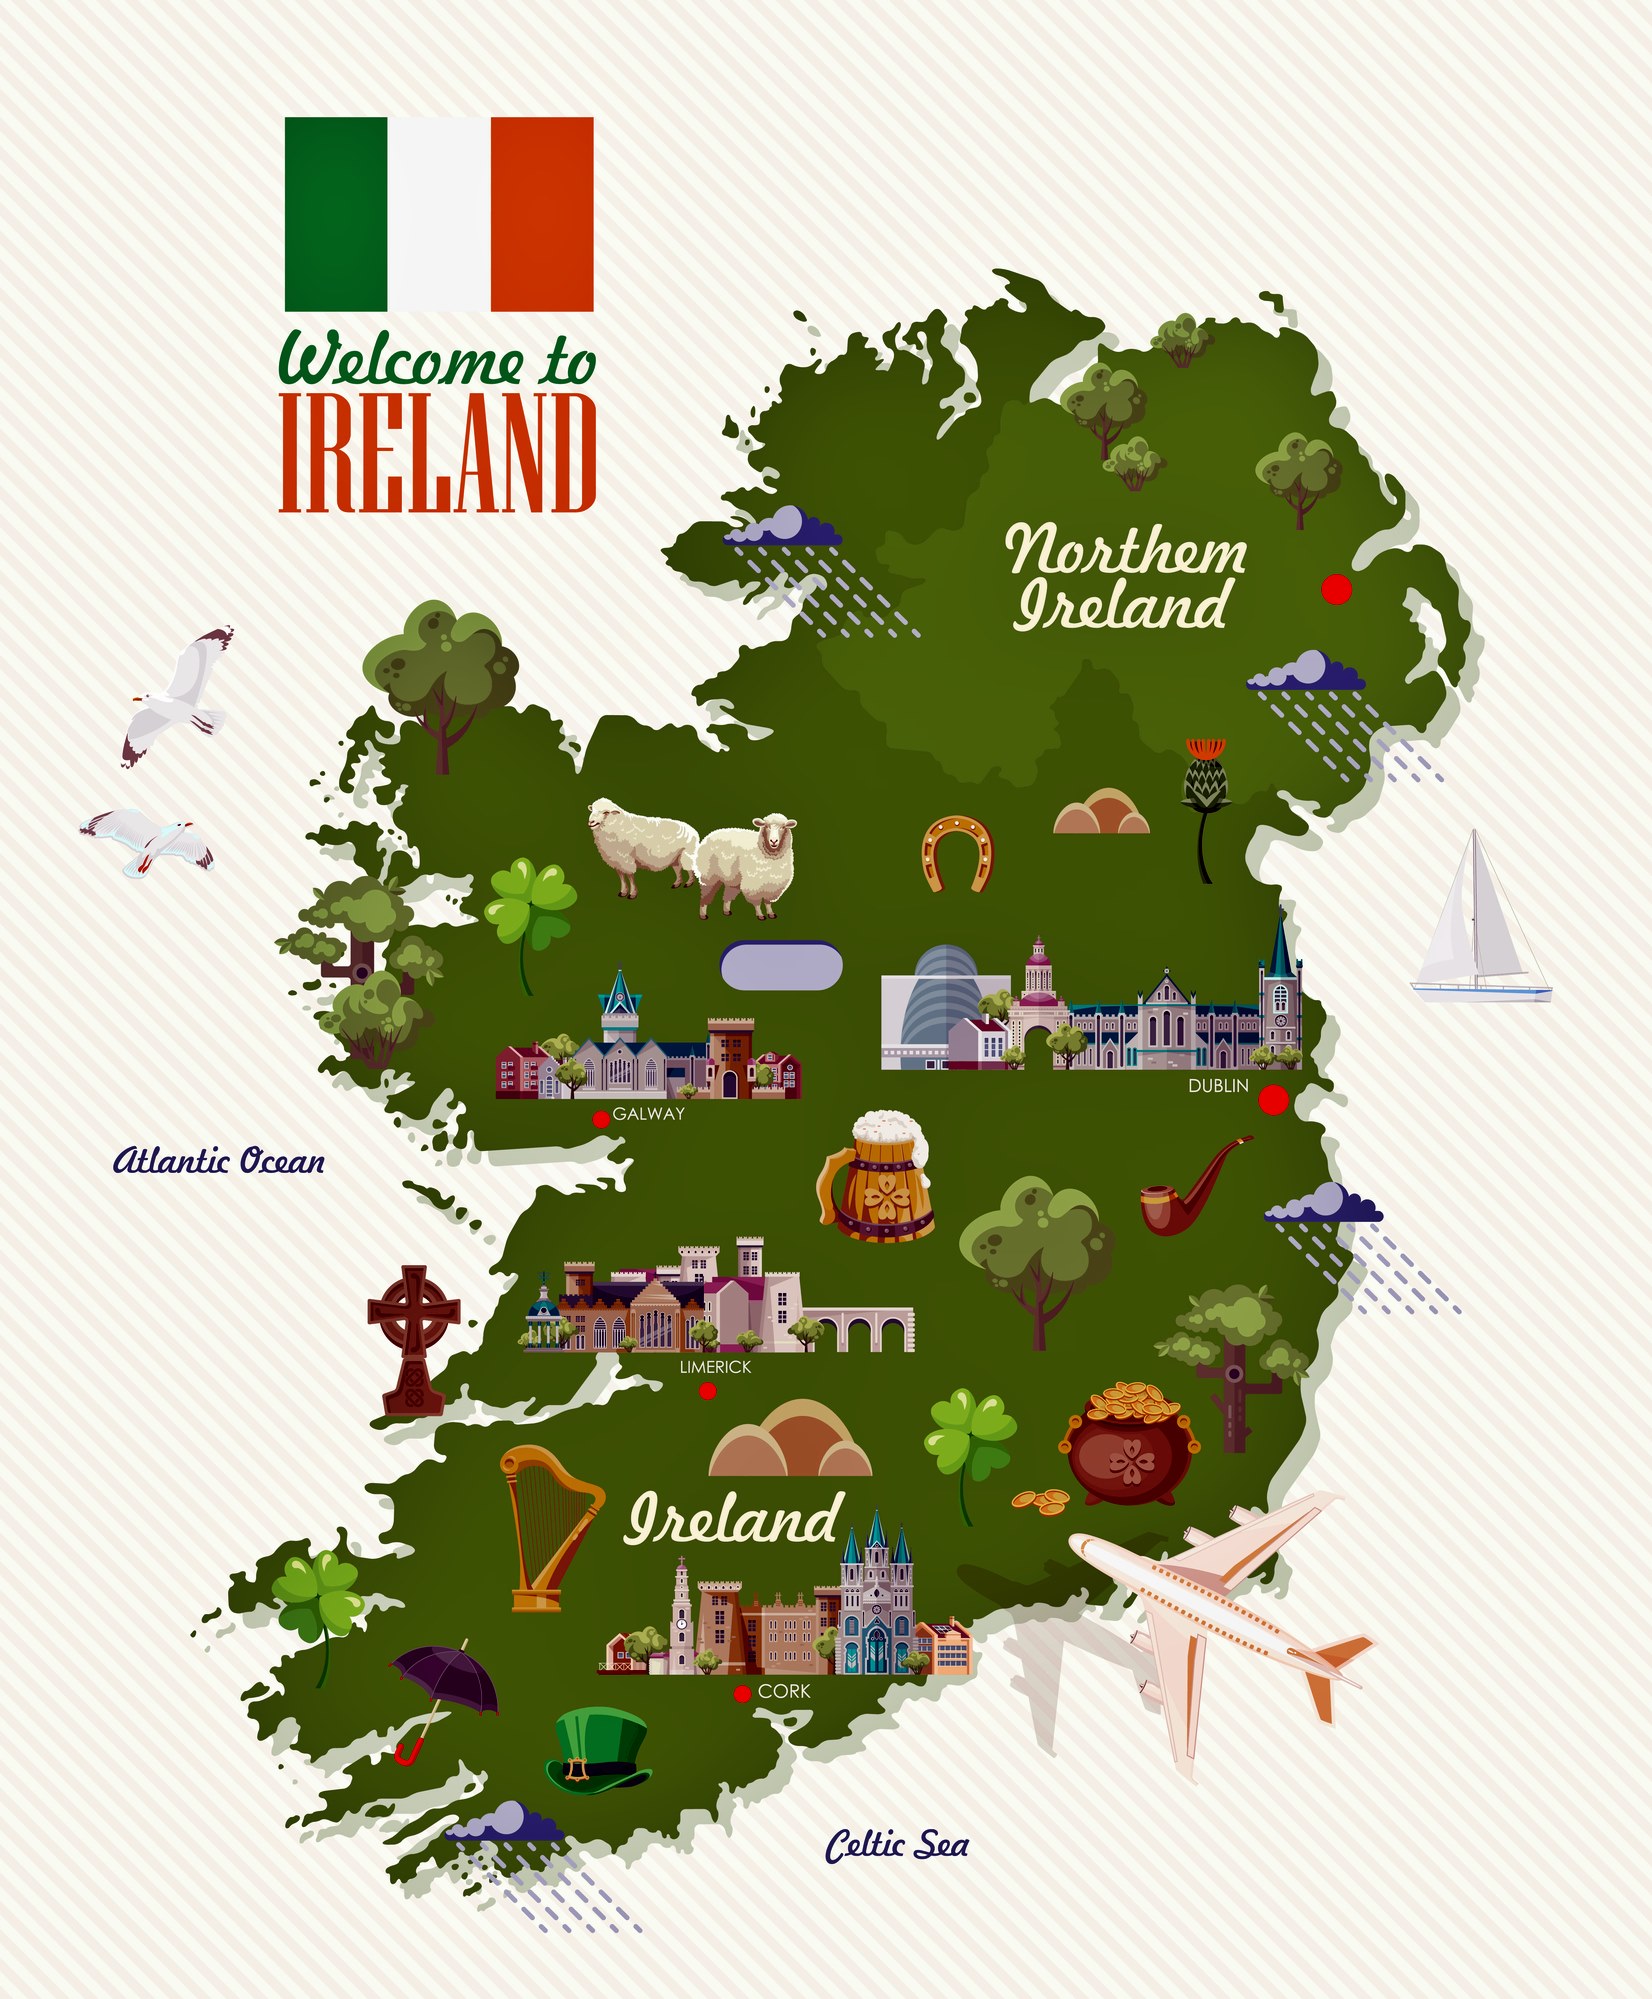 Ireland Tourist Attractions Map